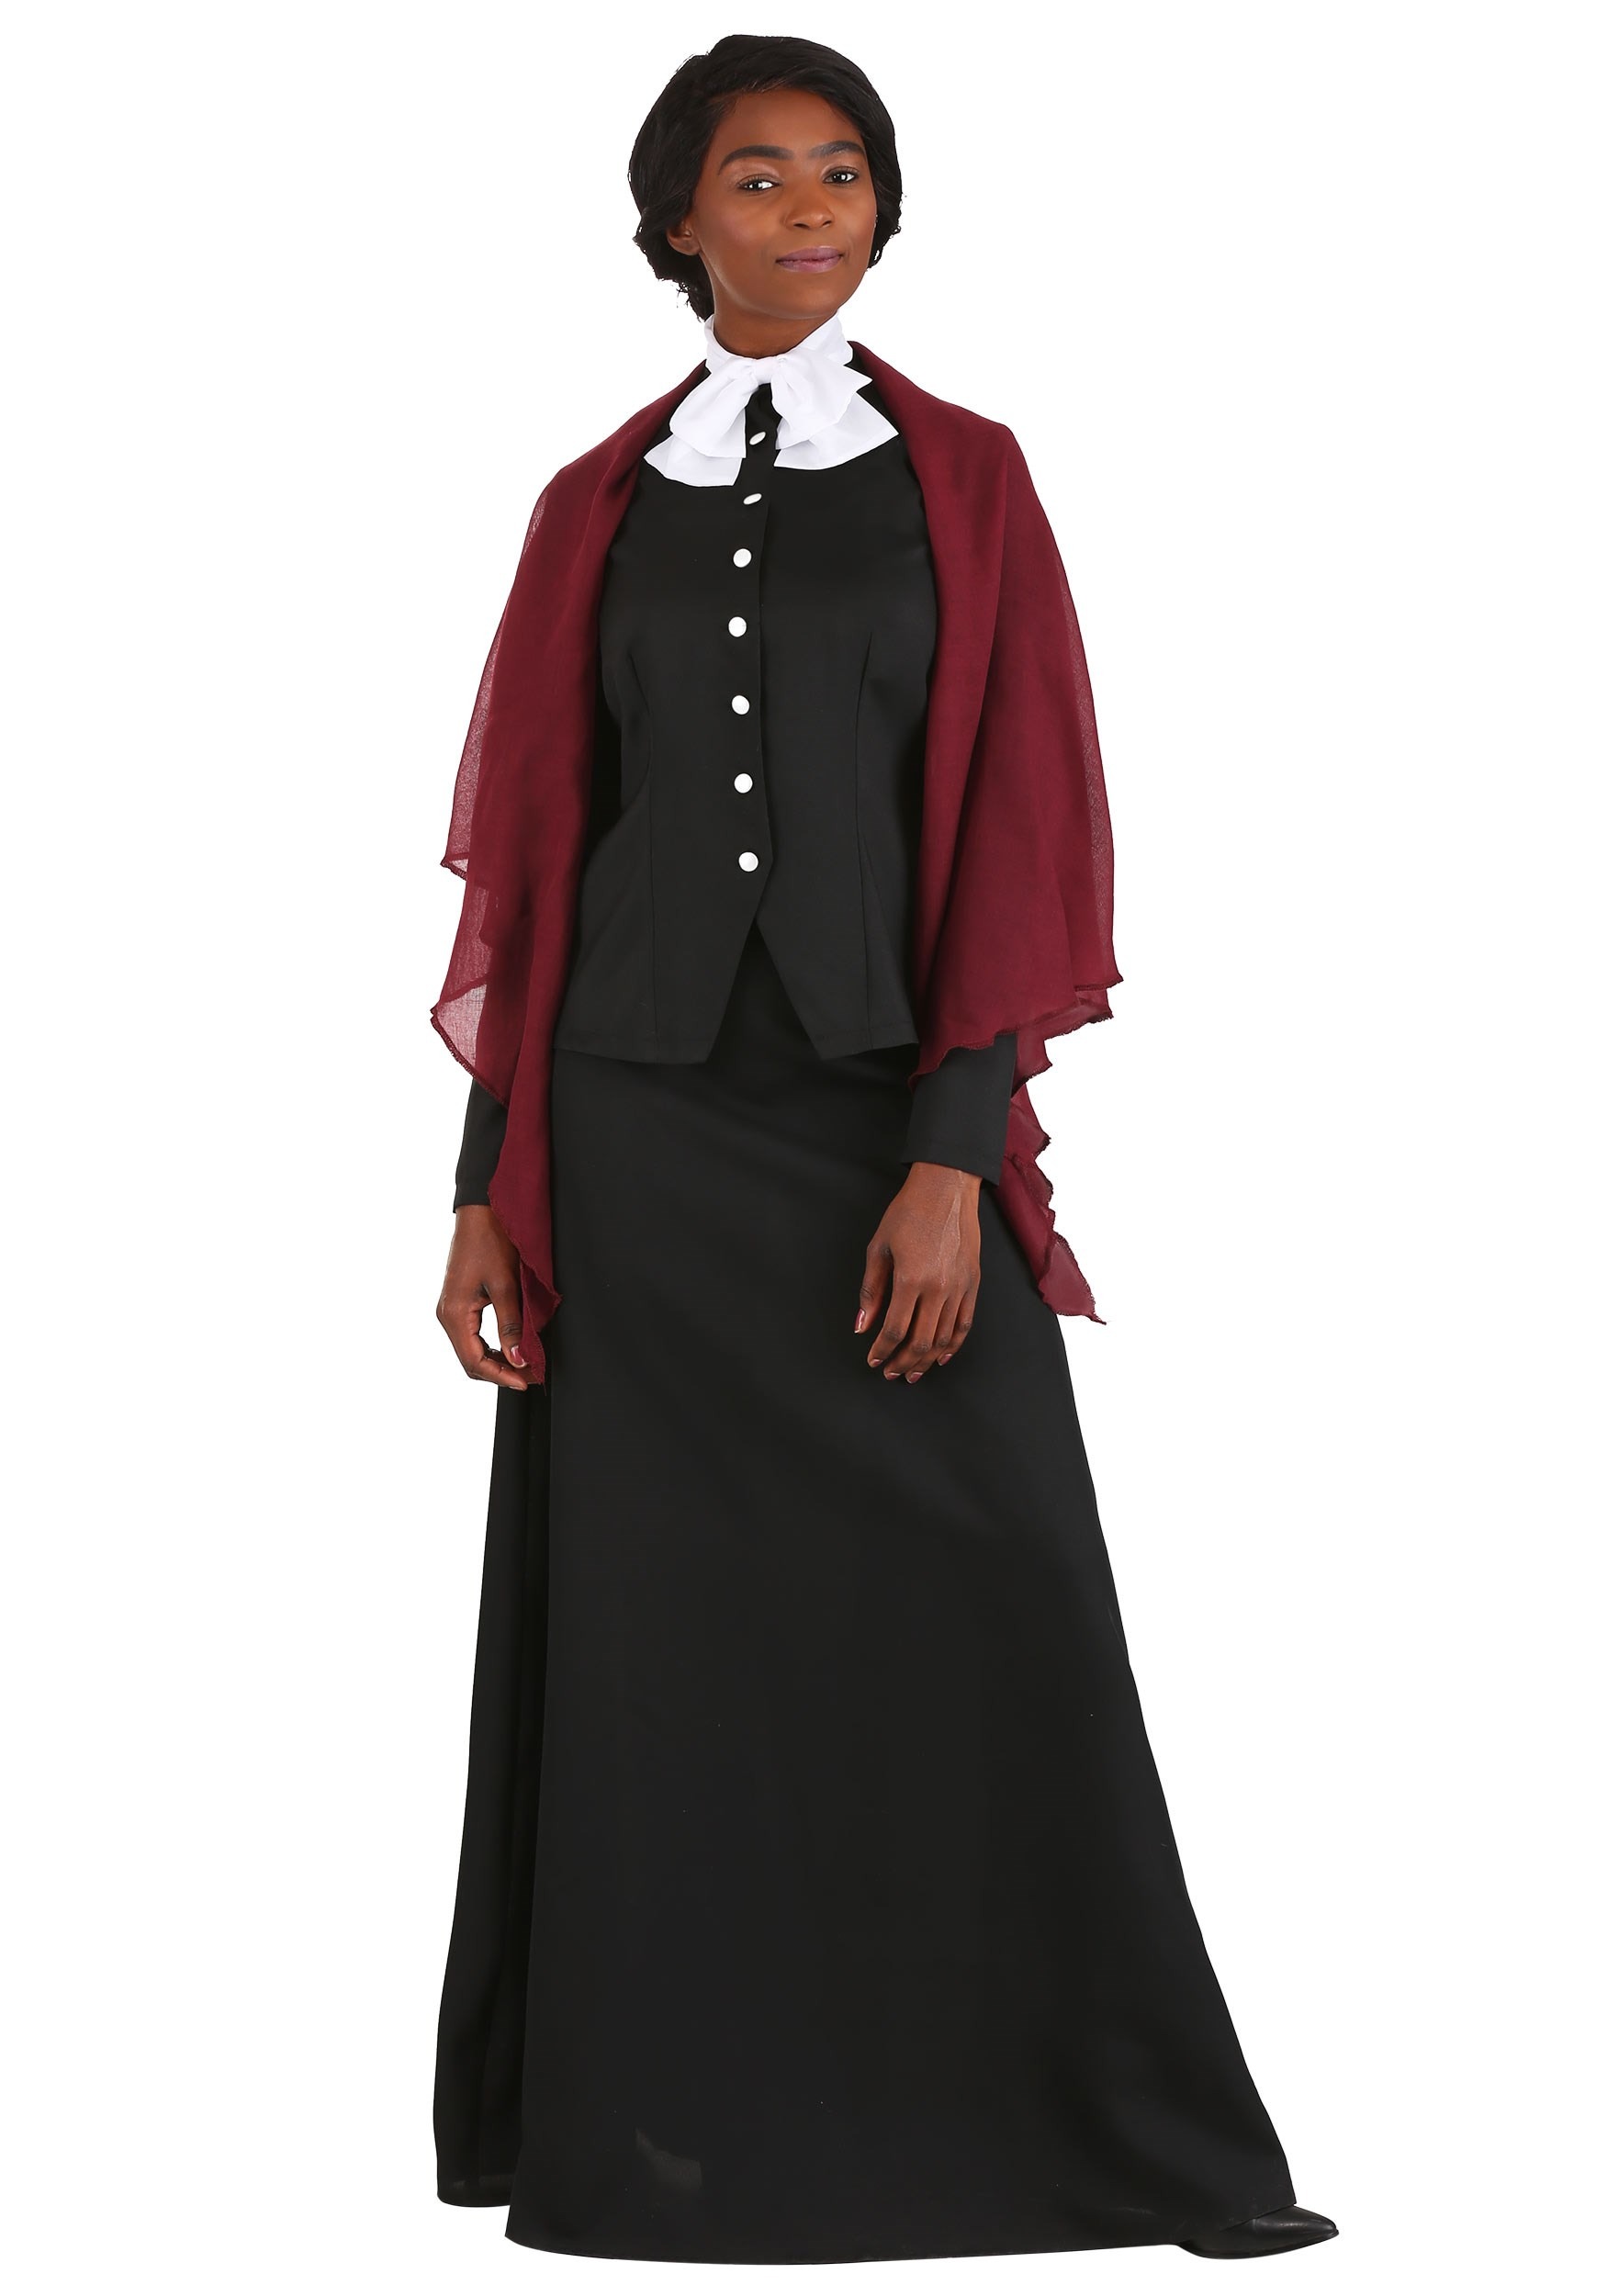 Plus Size Harriet Tubman Costume for Women